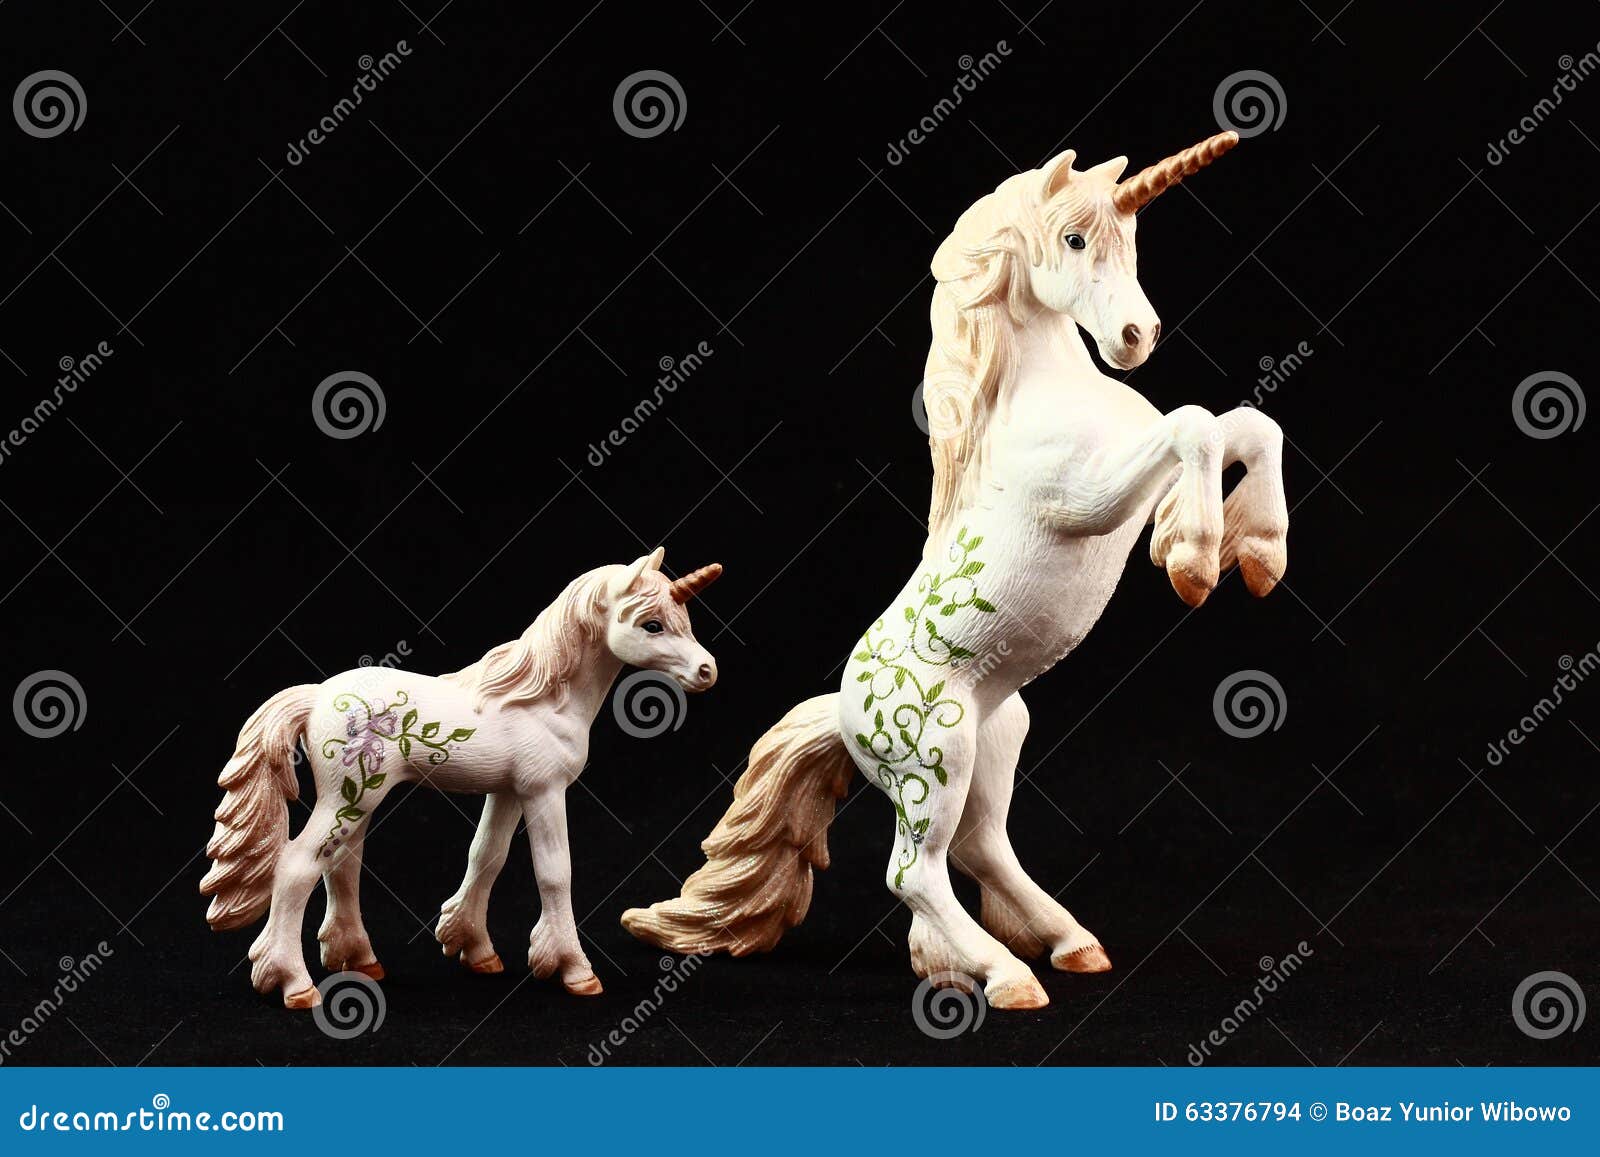 unicorn figurine toys